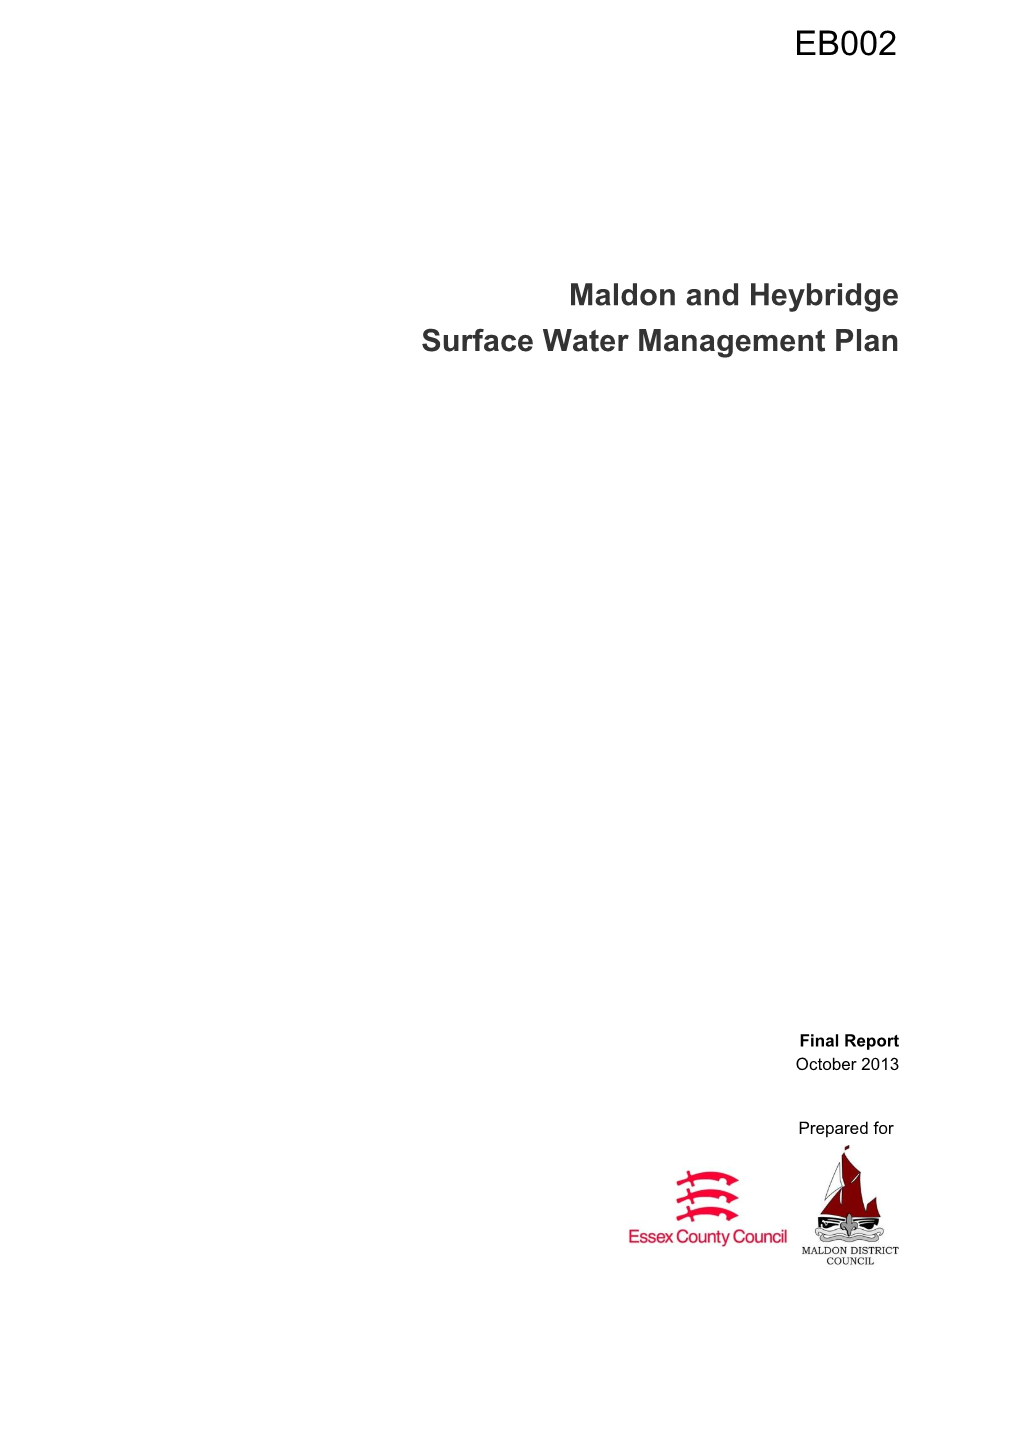 EB002 Maldon and Heybridge Surface Water Management Plan